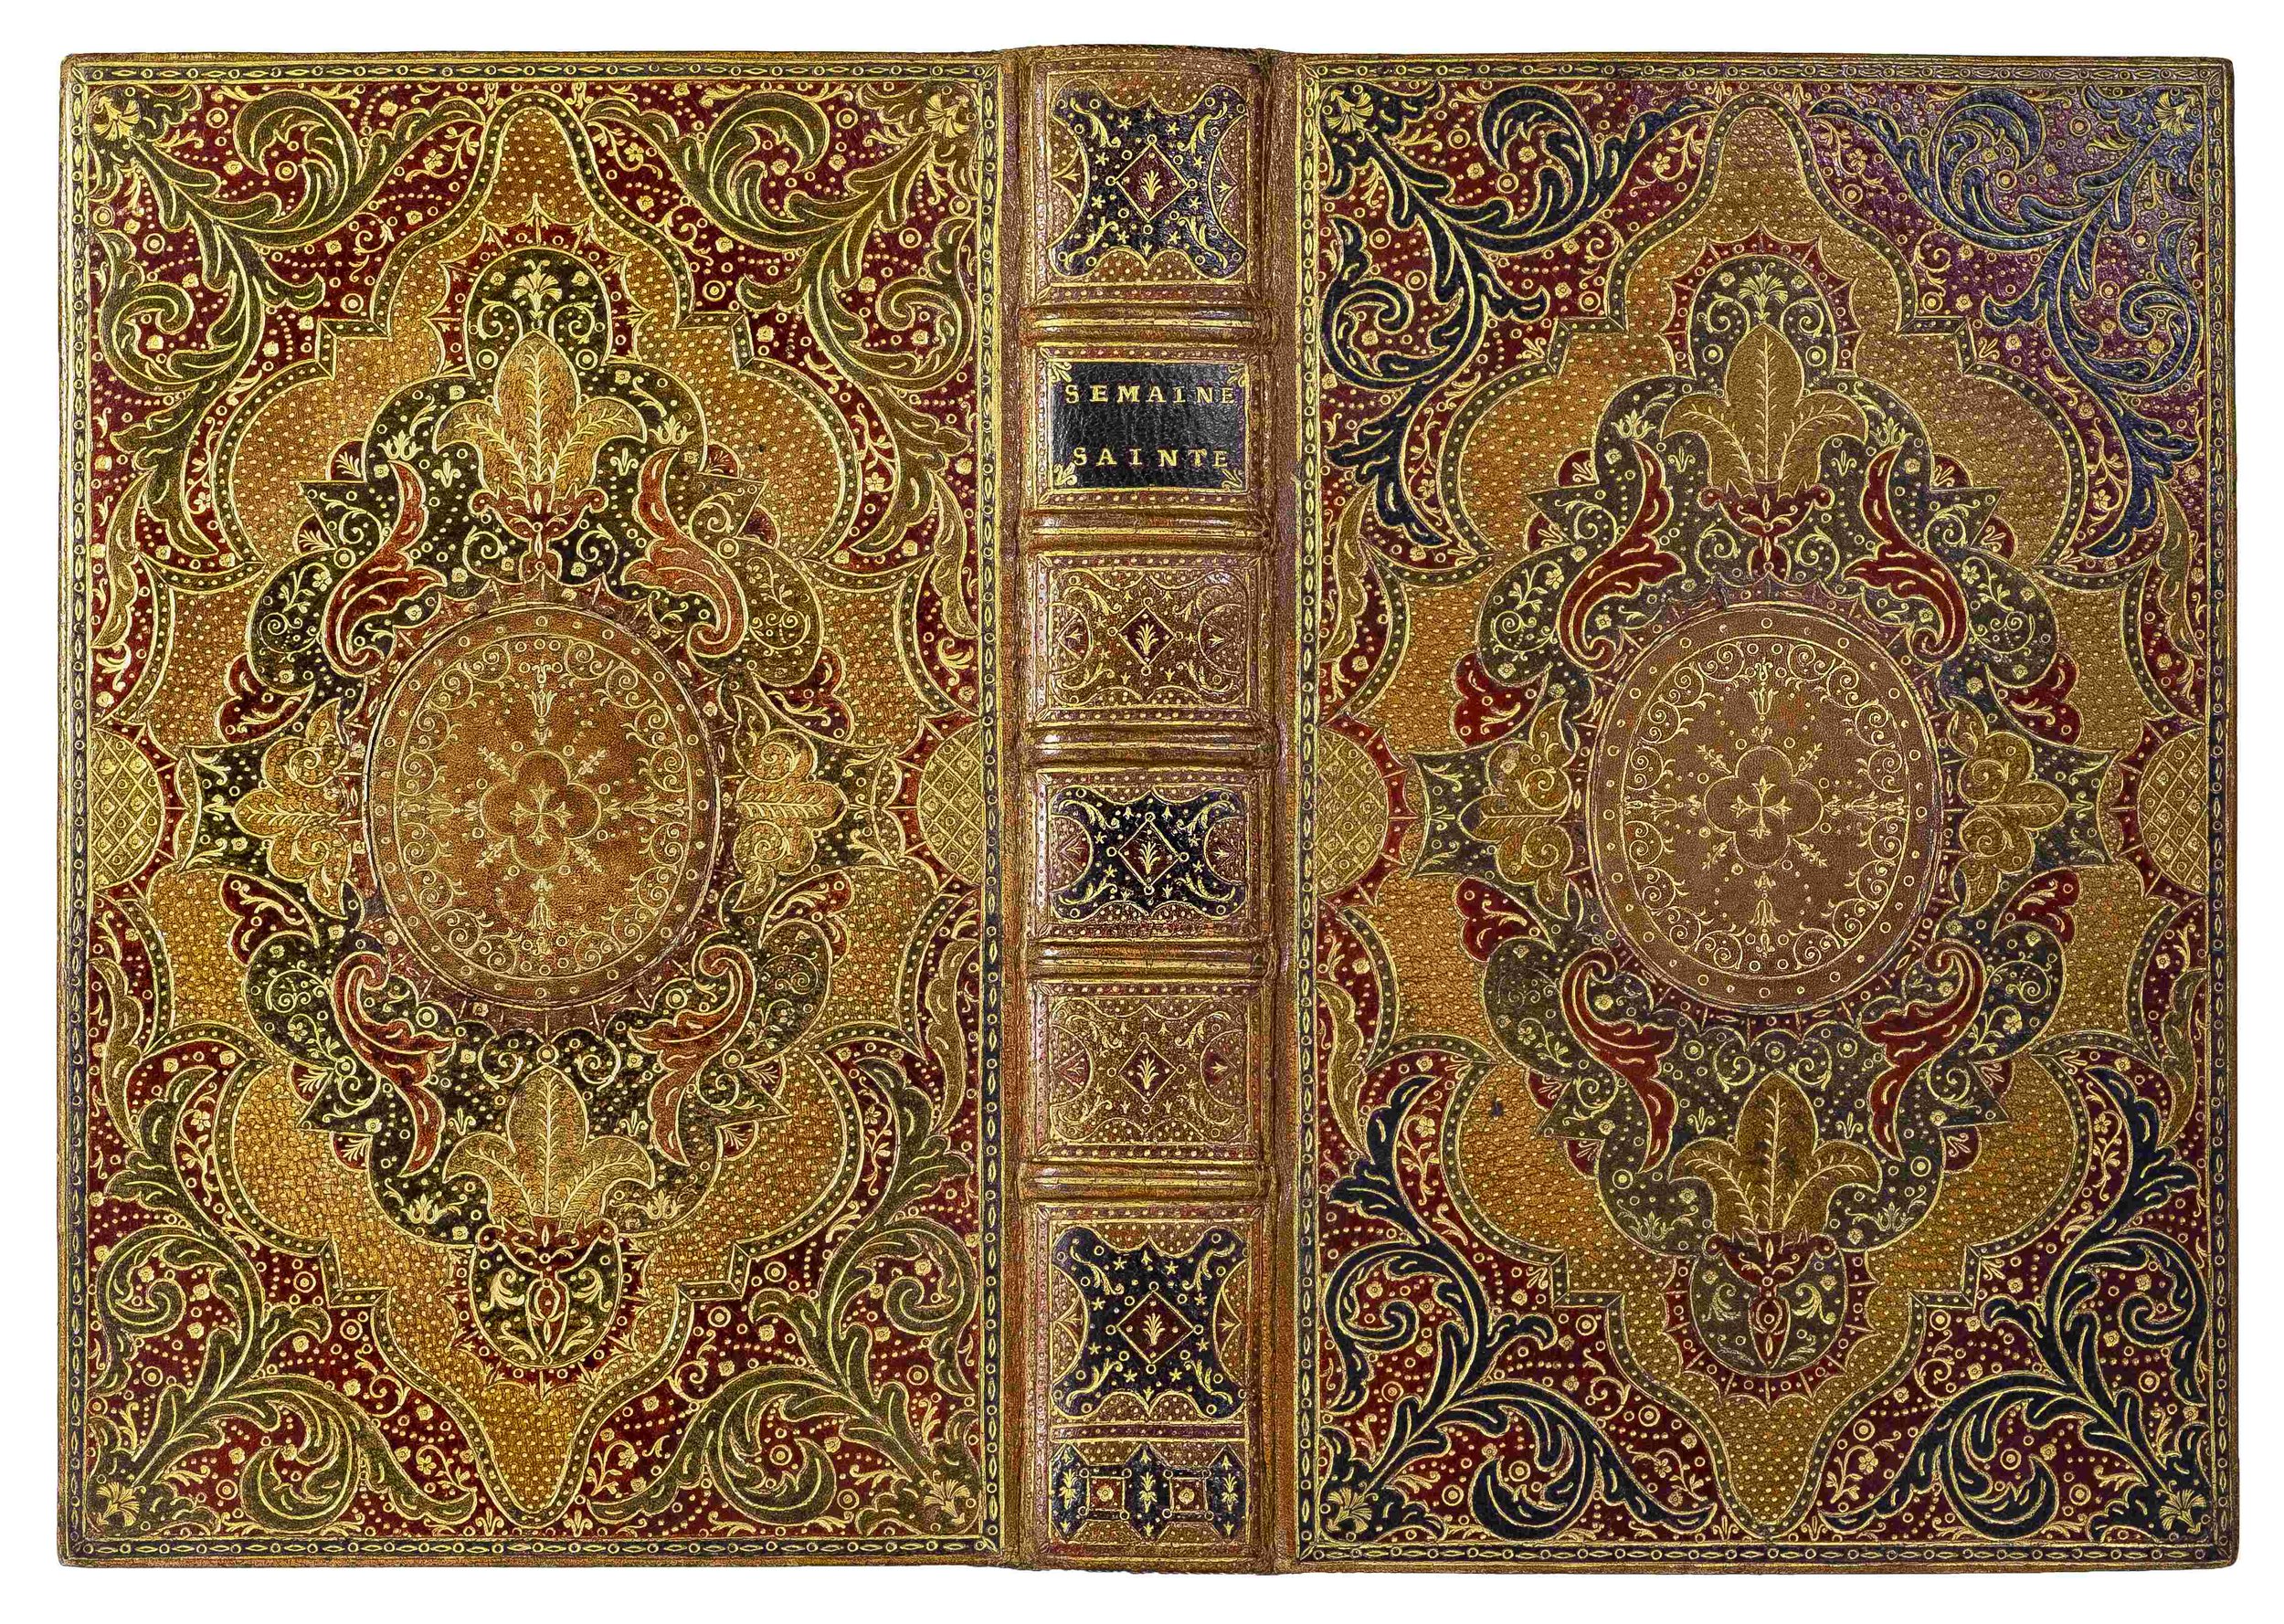 57-padeloup-baron pichon-henri-beraldi-Inlaid-Binding-morocco-mosaic-reliure-maroquin-18th-century.jpg